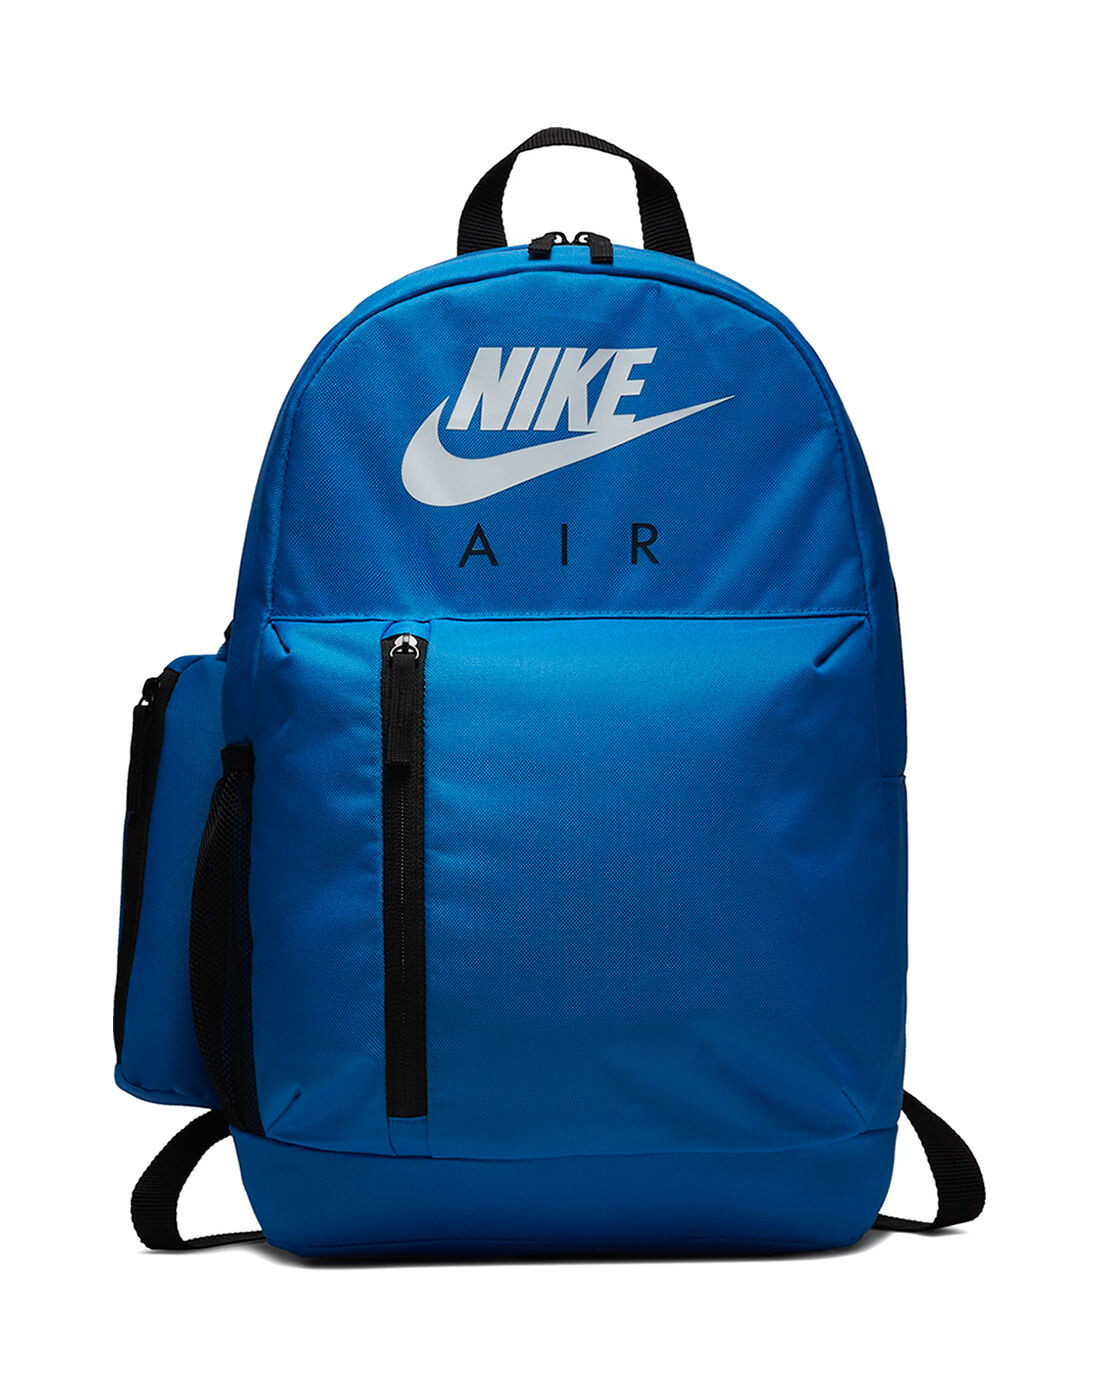 nike blue school bags